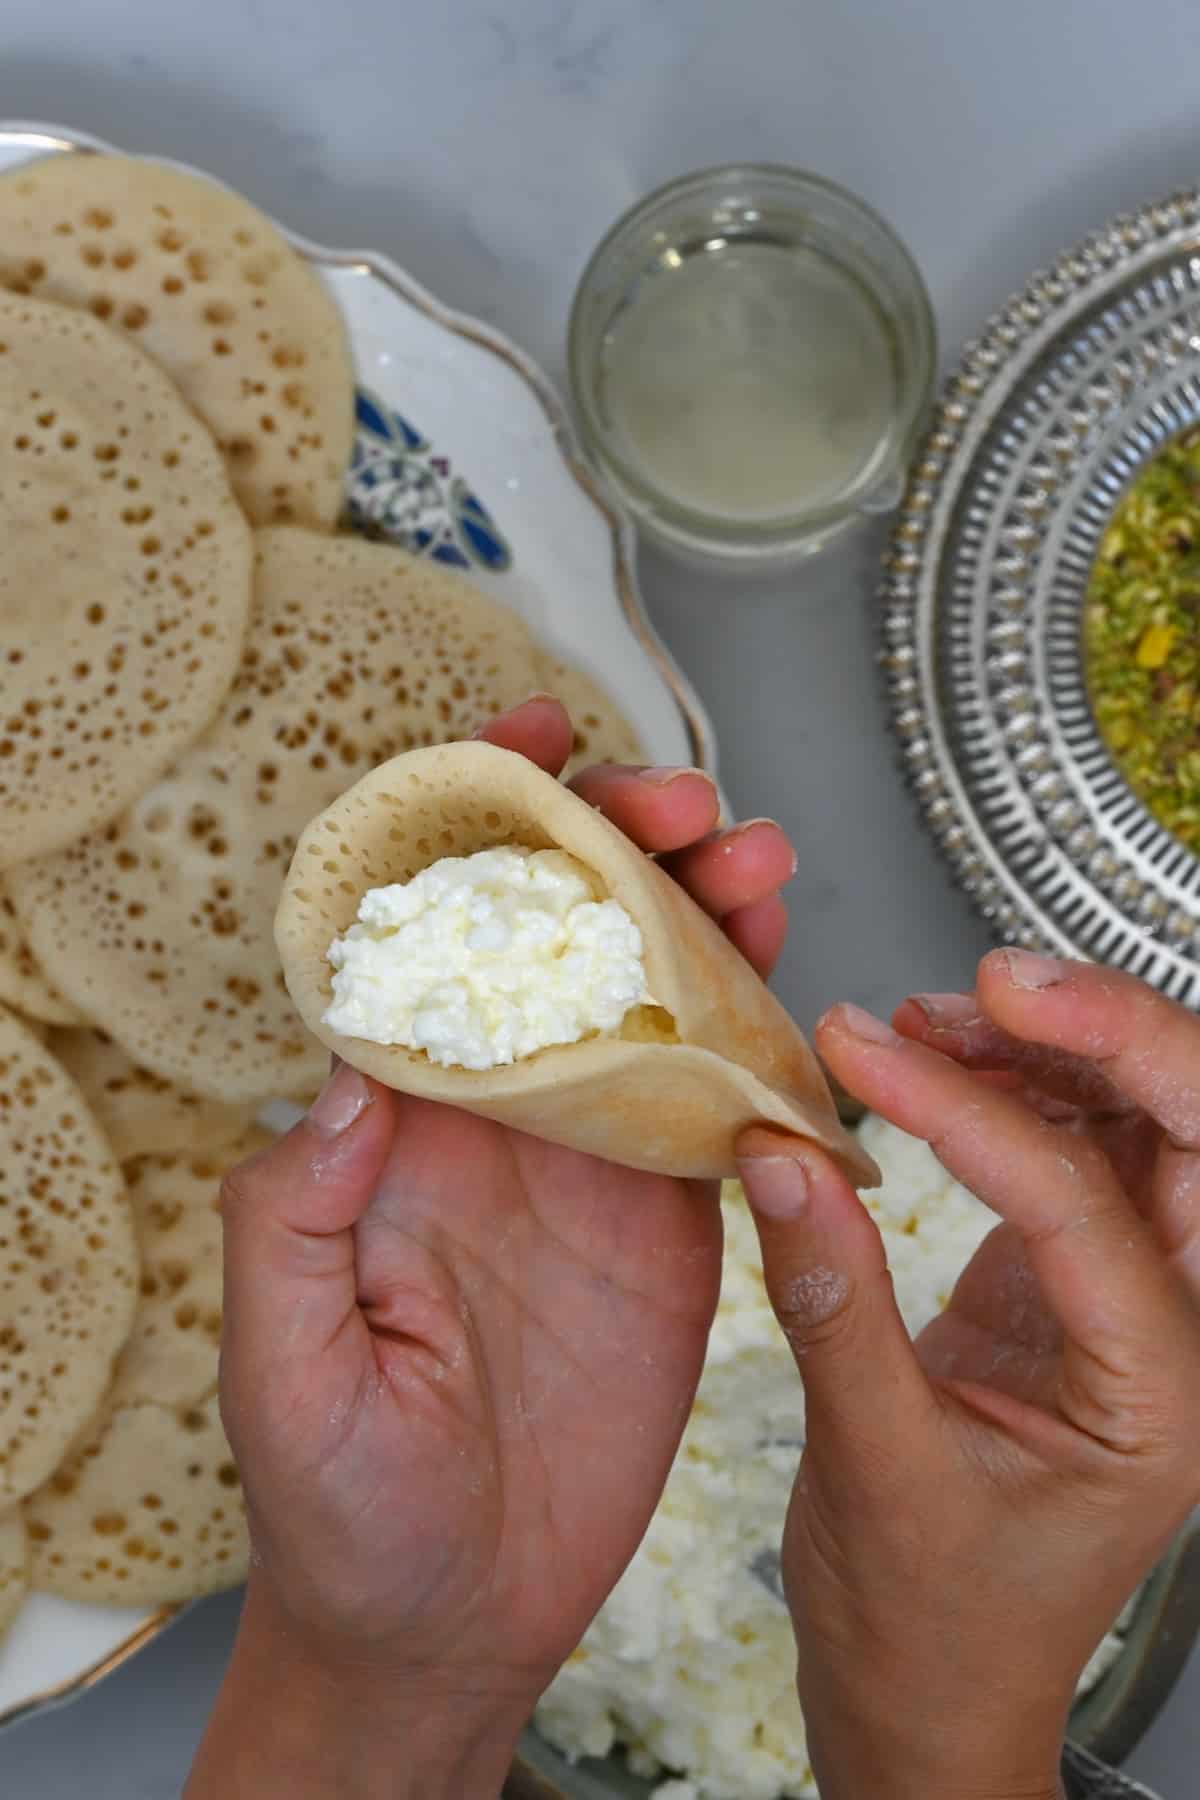 Making qatayef with ashta